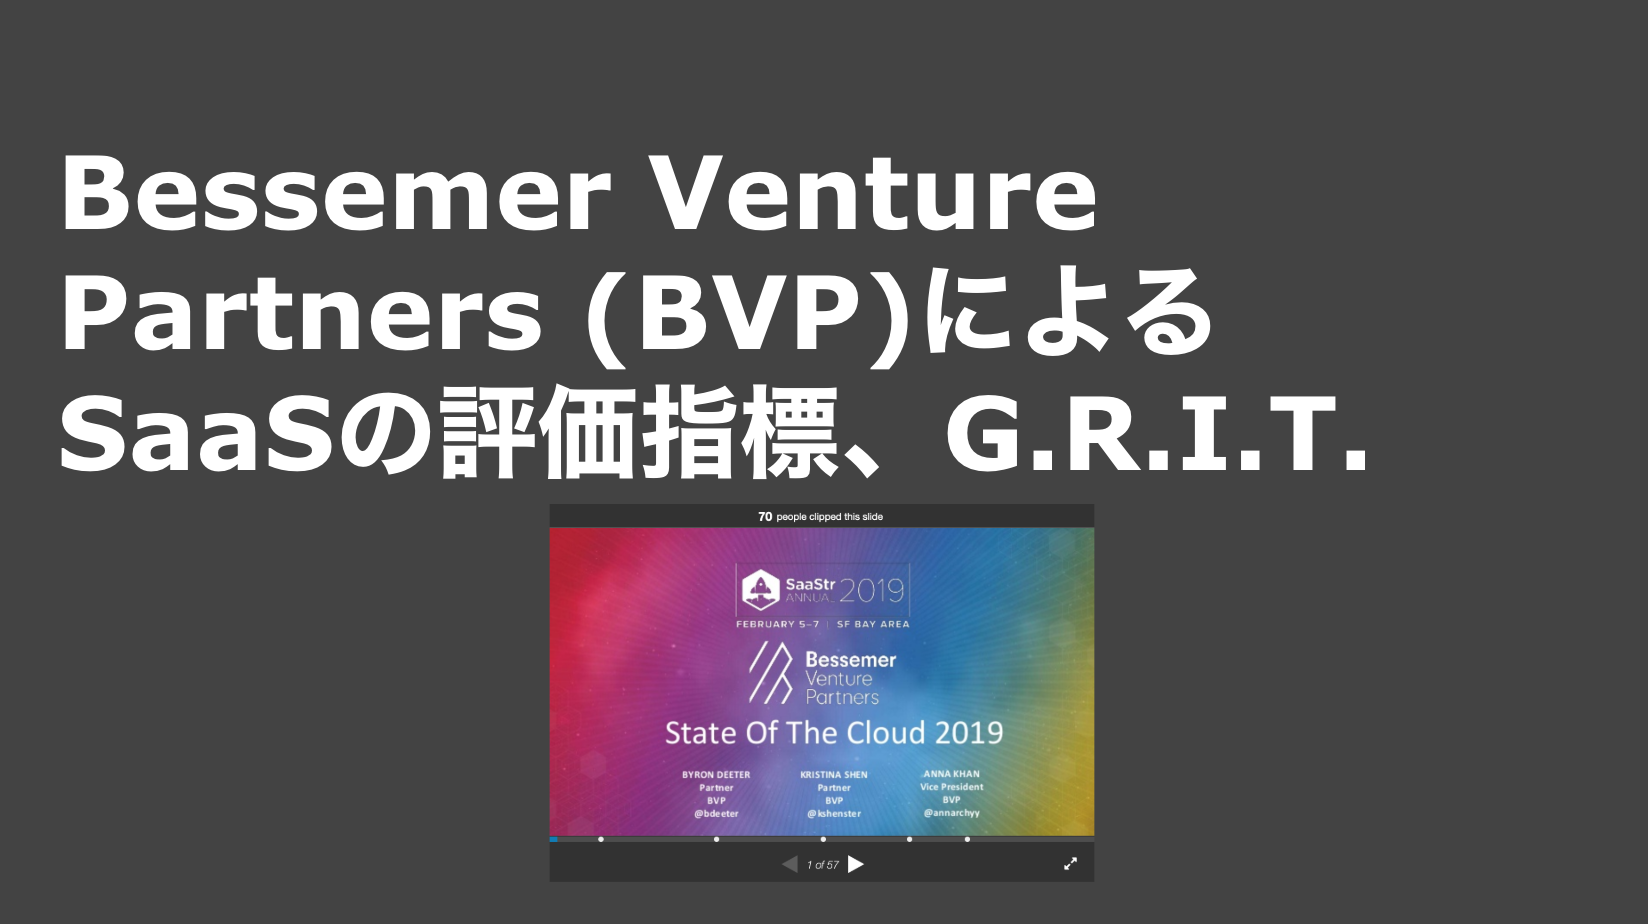 saaslife_Bessemer Venture Partners (BVP)によるSaaSの評価指標、G.R.I.T.